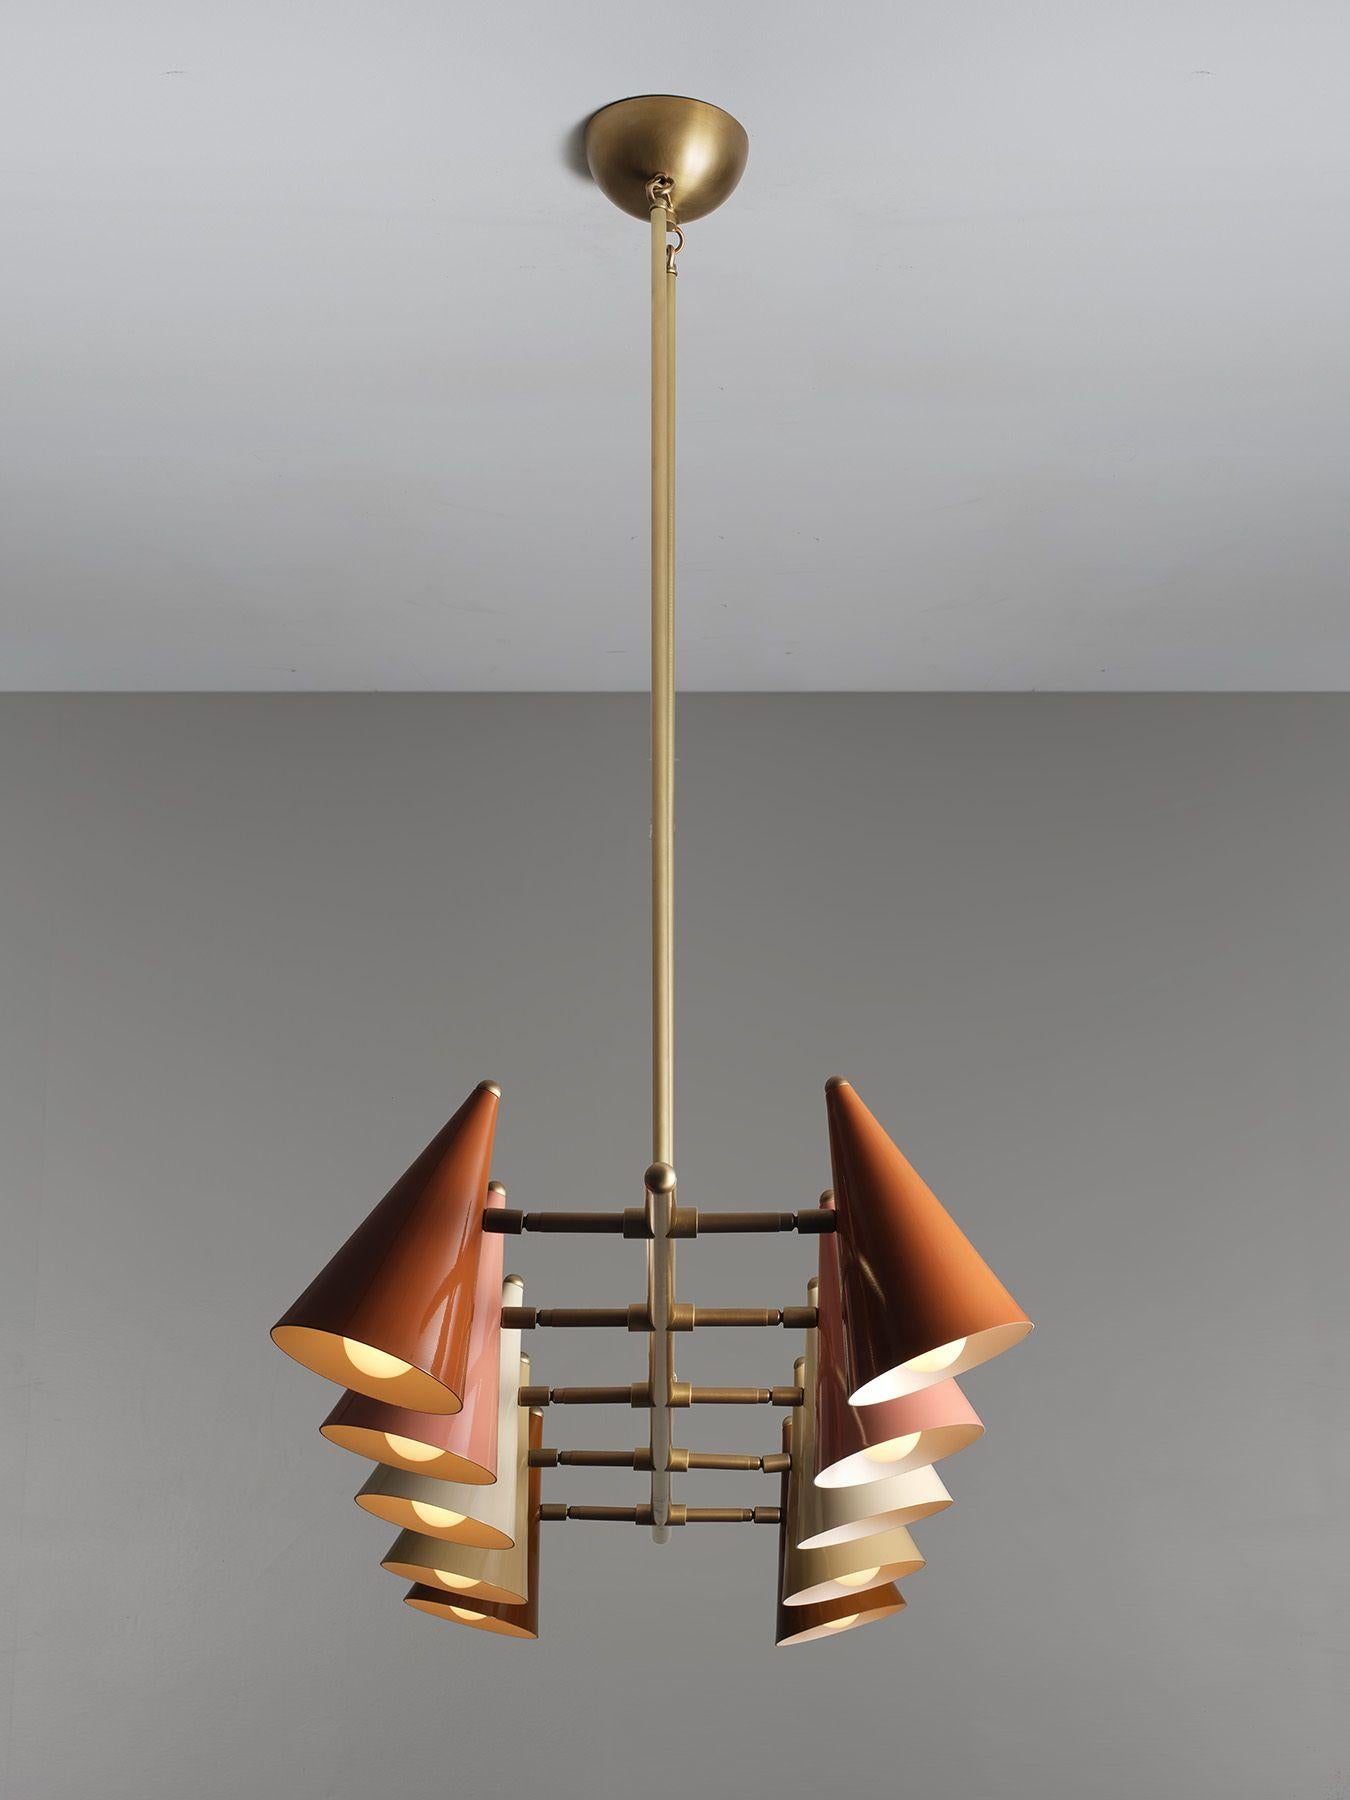 American FLOTILLA Chandelier in Brass and Terracotta Enamel by Blueprint Lighting 2021 For Sale